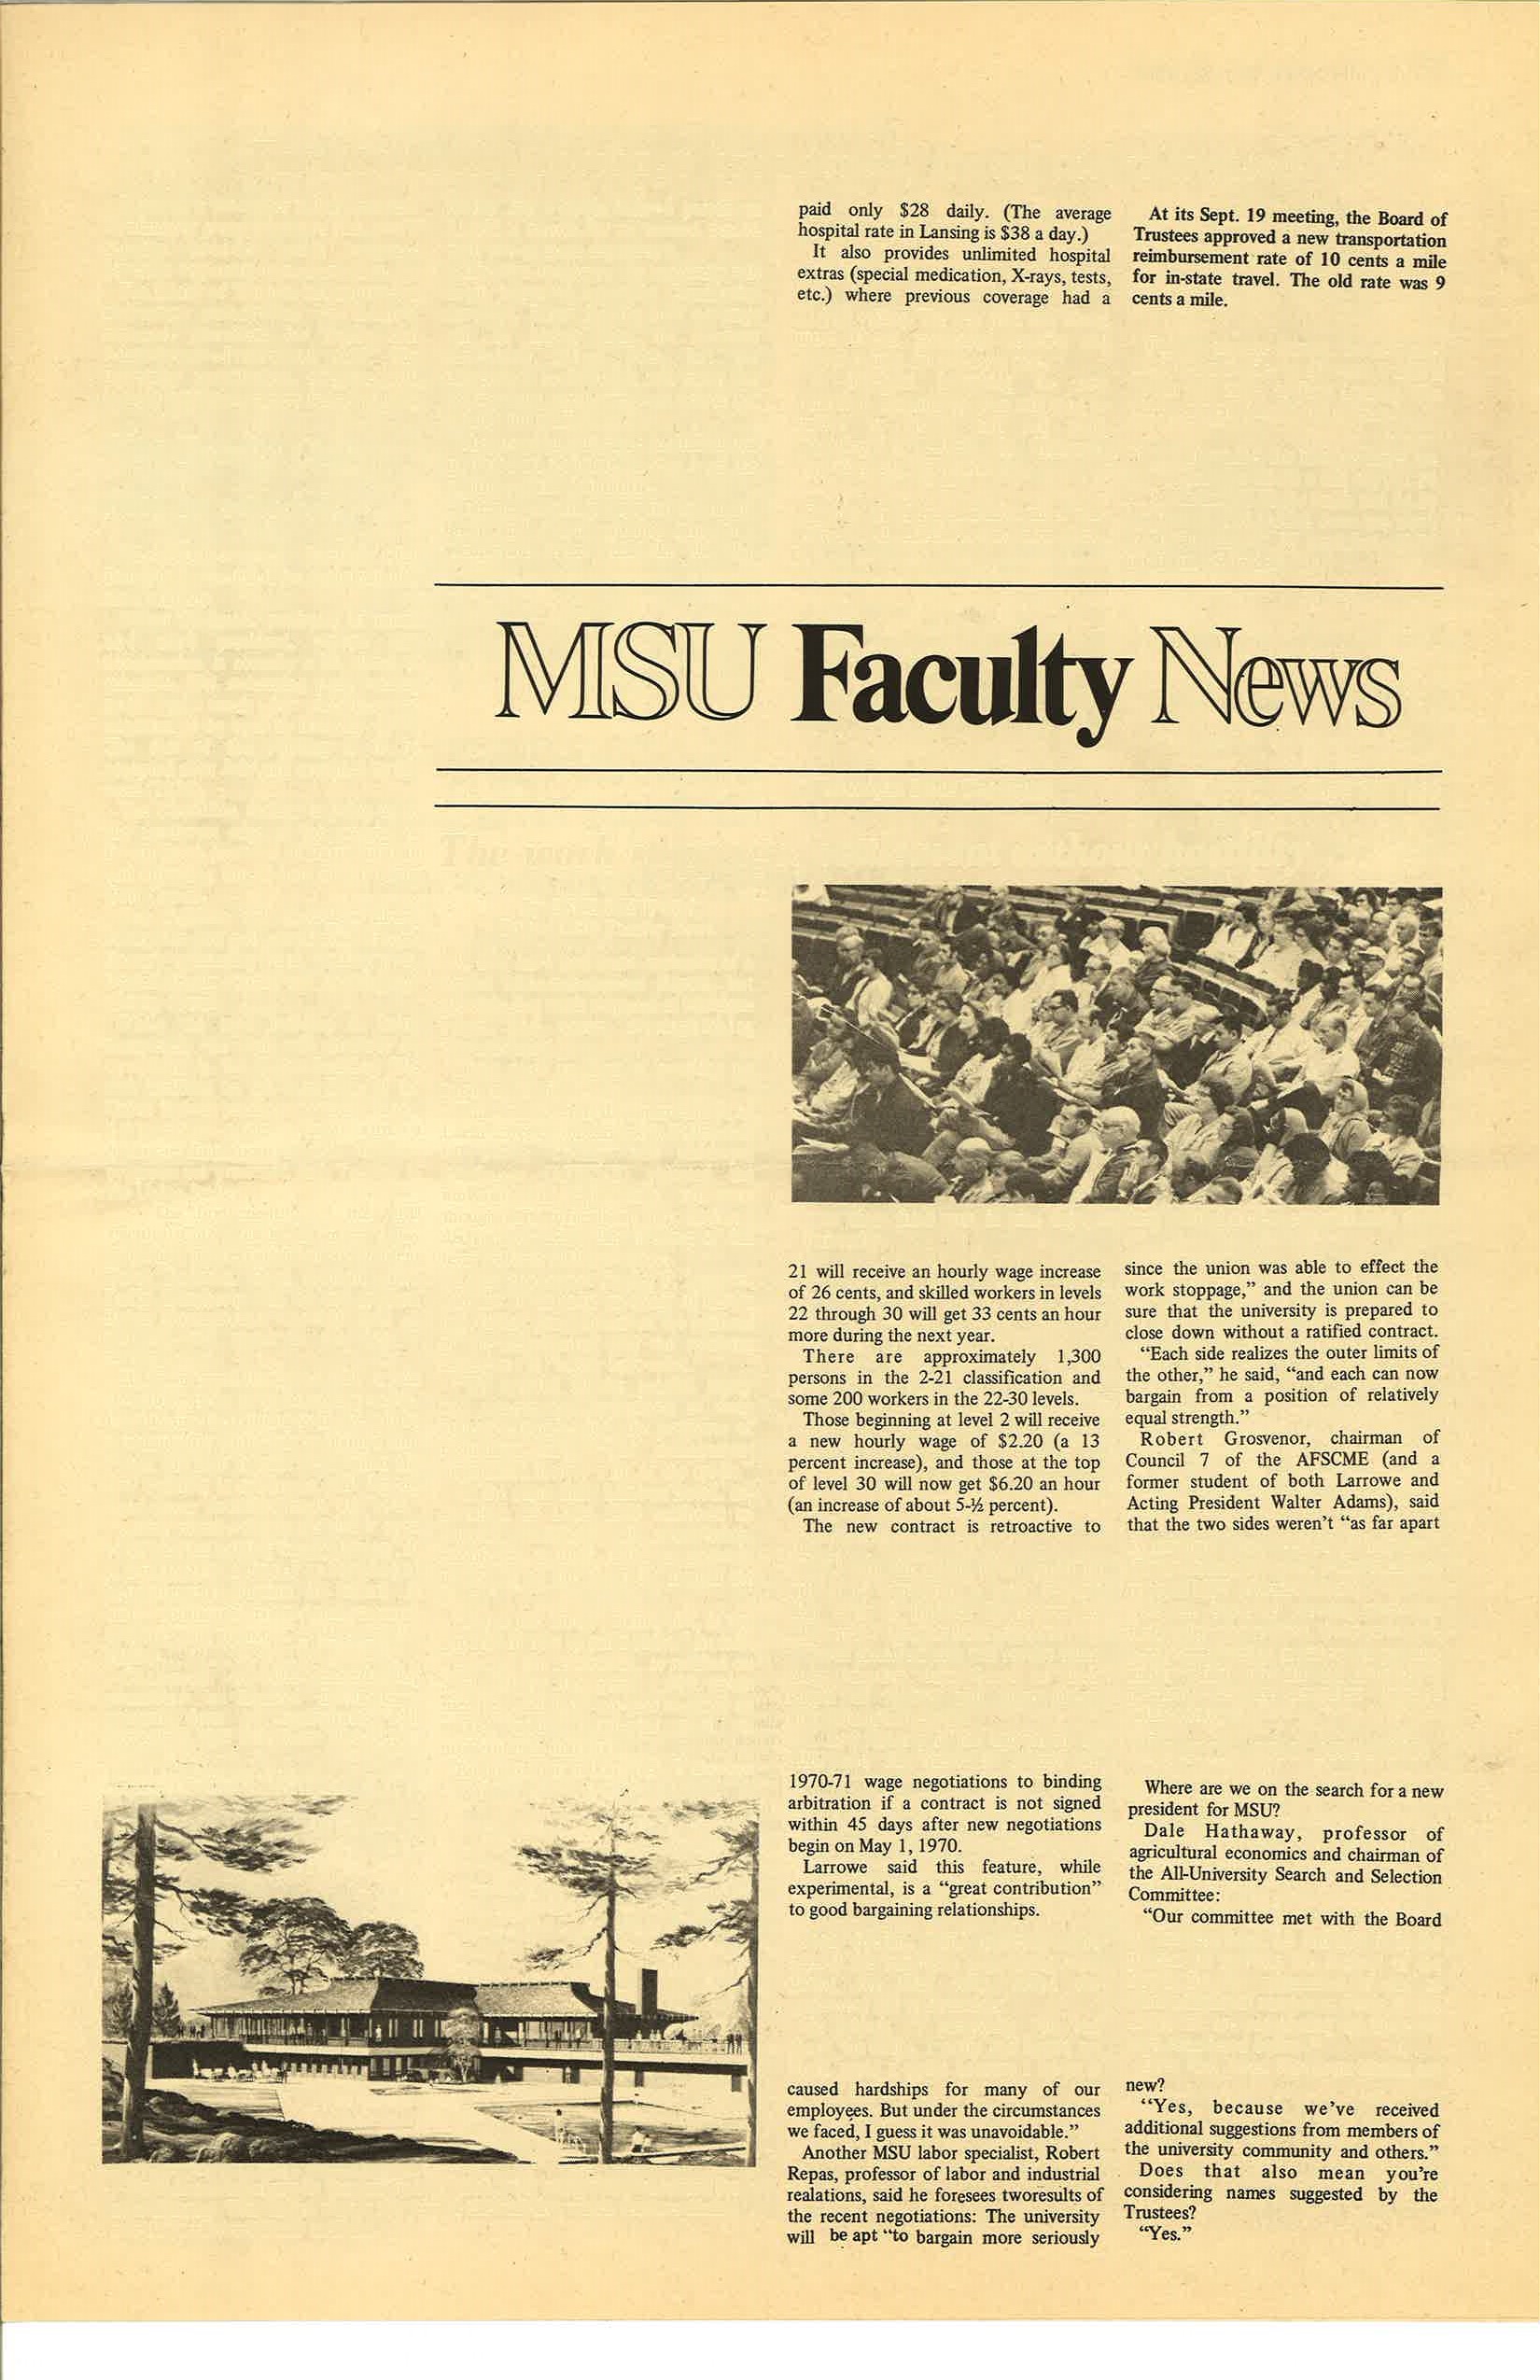 MSU News Bulletin, Vol. 1 No. 1, September 30, 1969